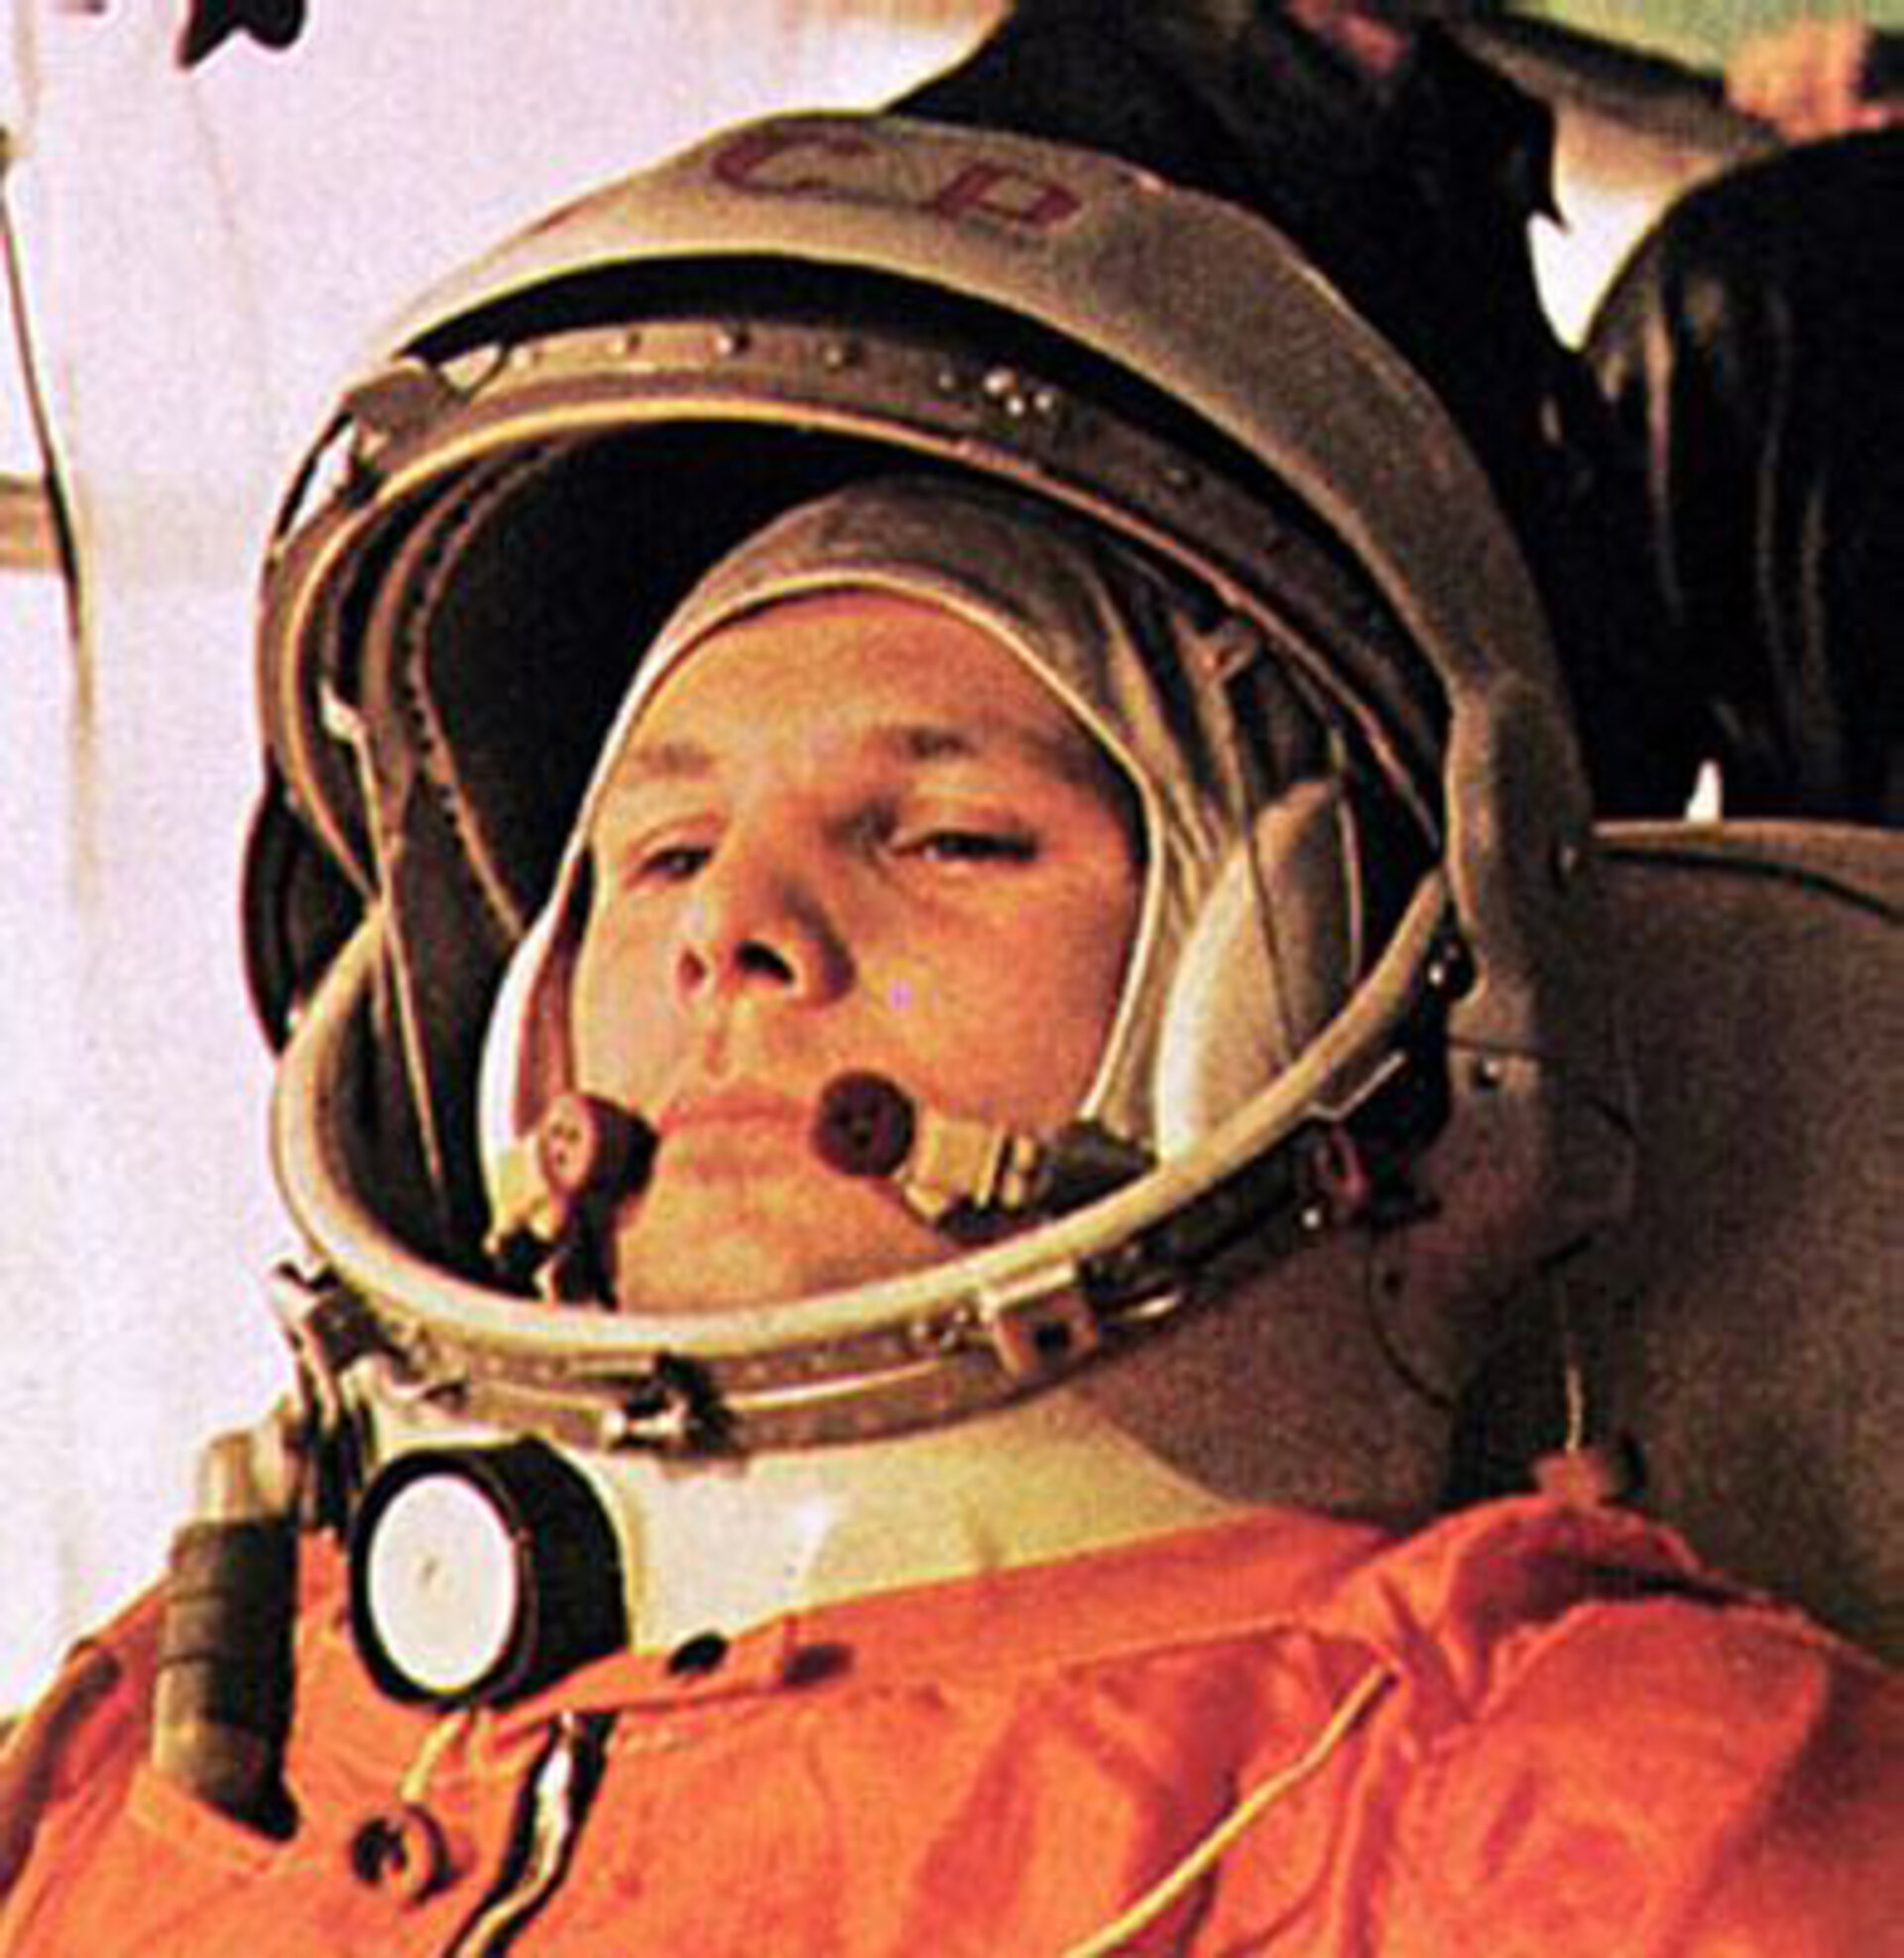 Yuri Gagarin the first human in space, on Vostok 1